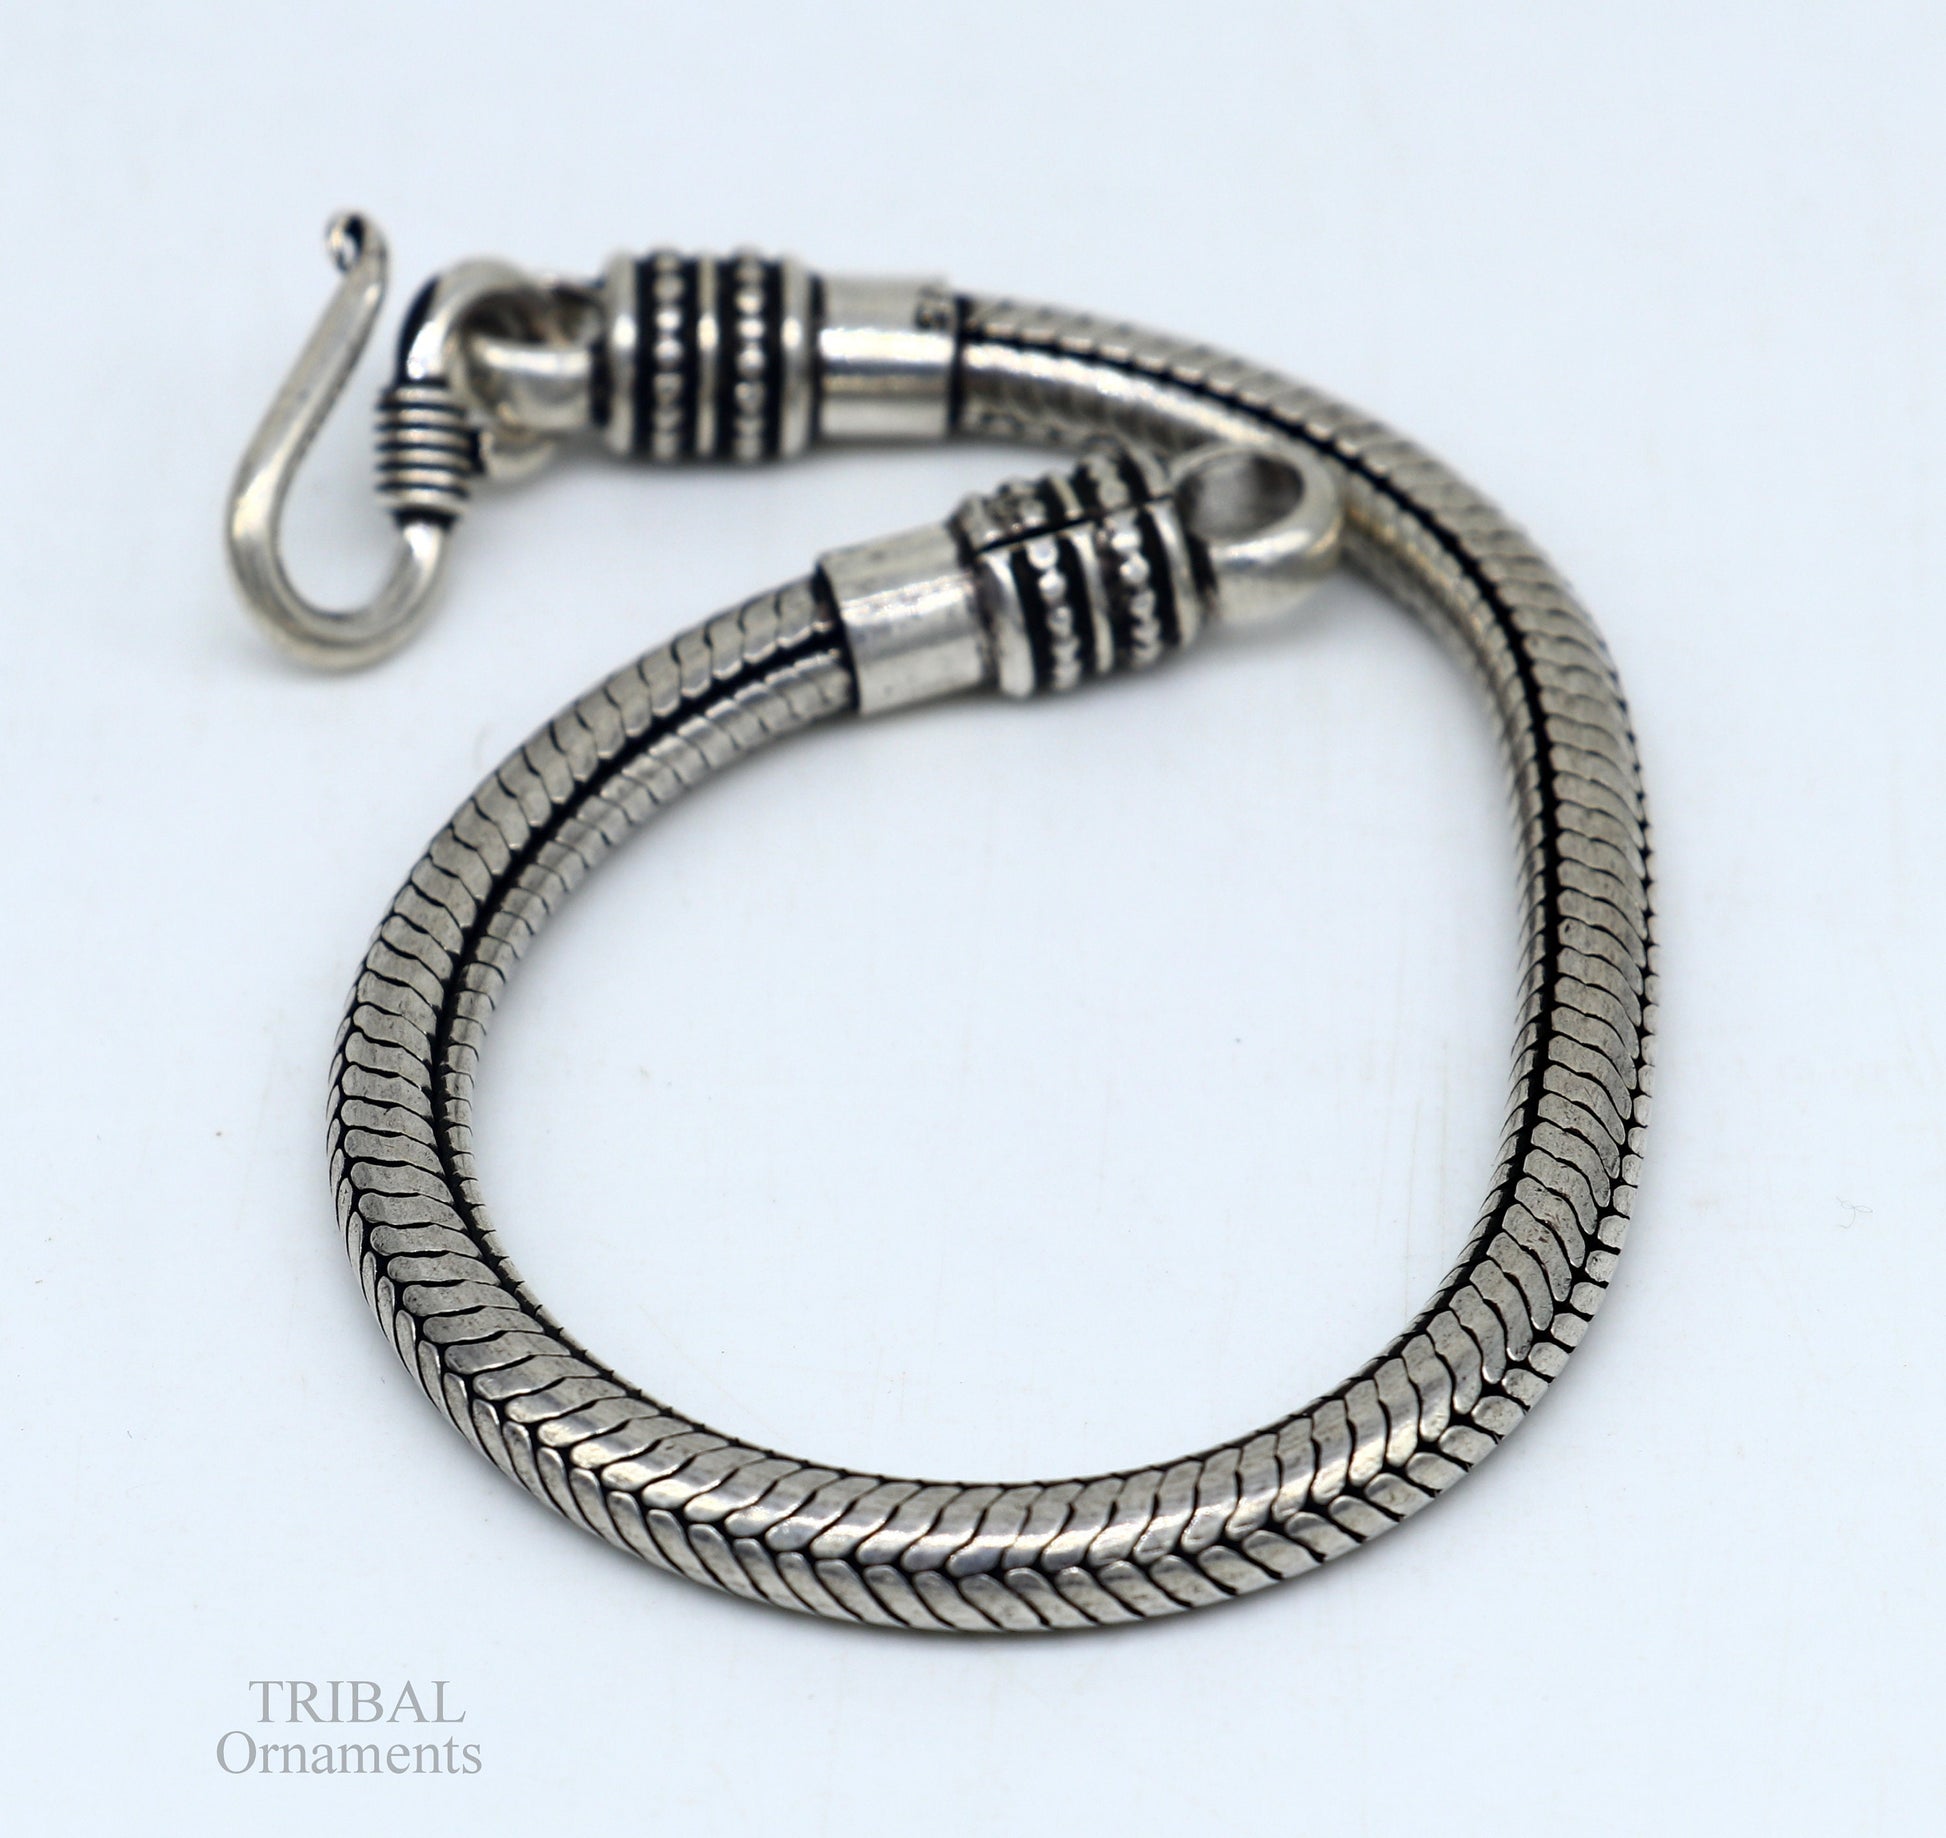 4.5MM Amazing vintage design customized stylish snake chain handmade 925 sterling silver bracelet unisex personalize jewelry sbr241 - TRIBAL ORNAMENTS